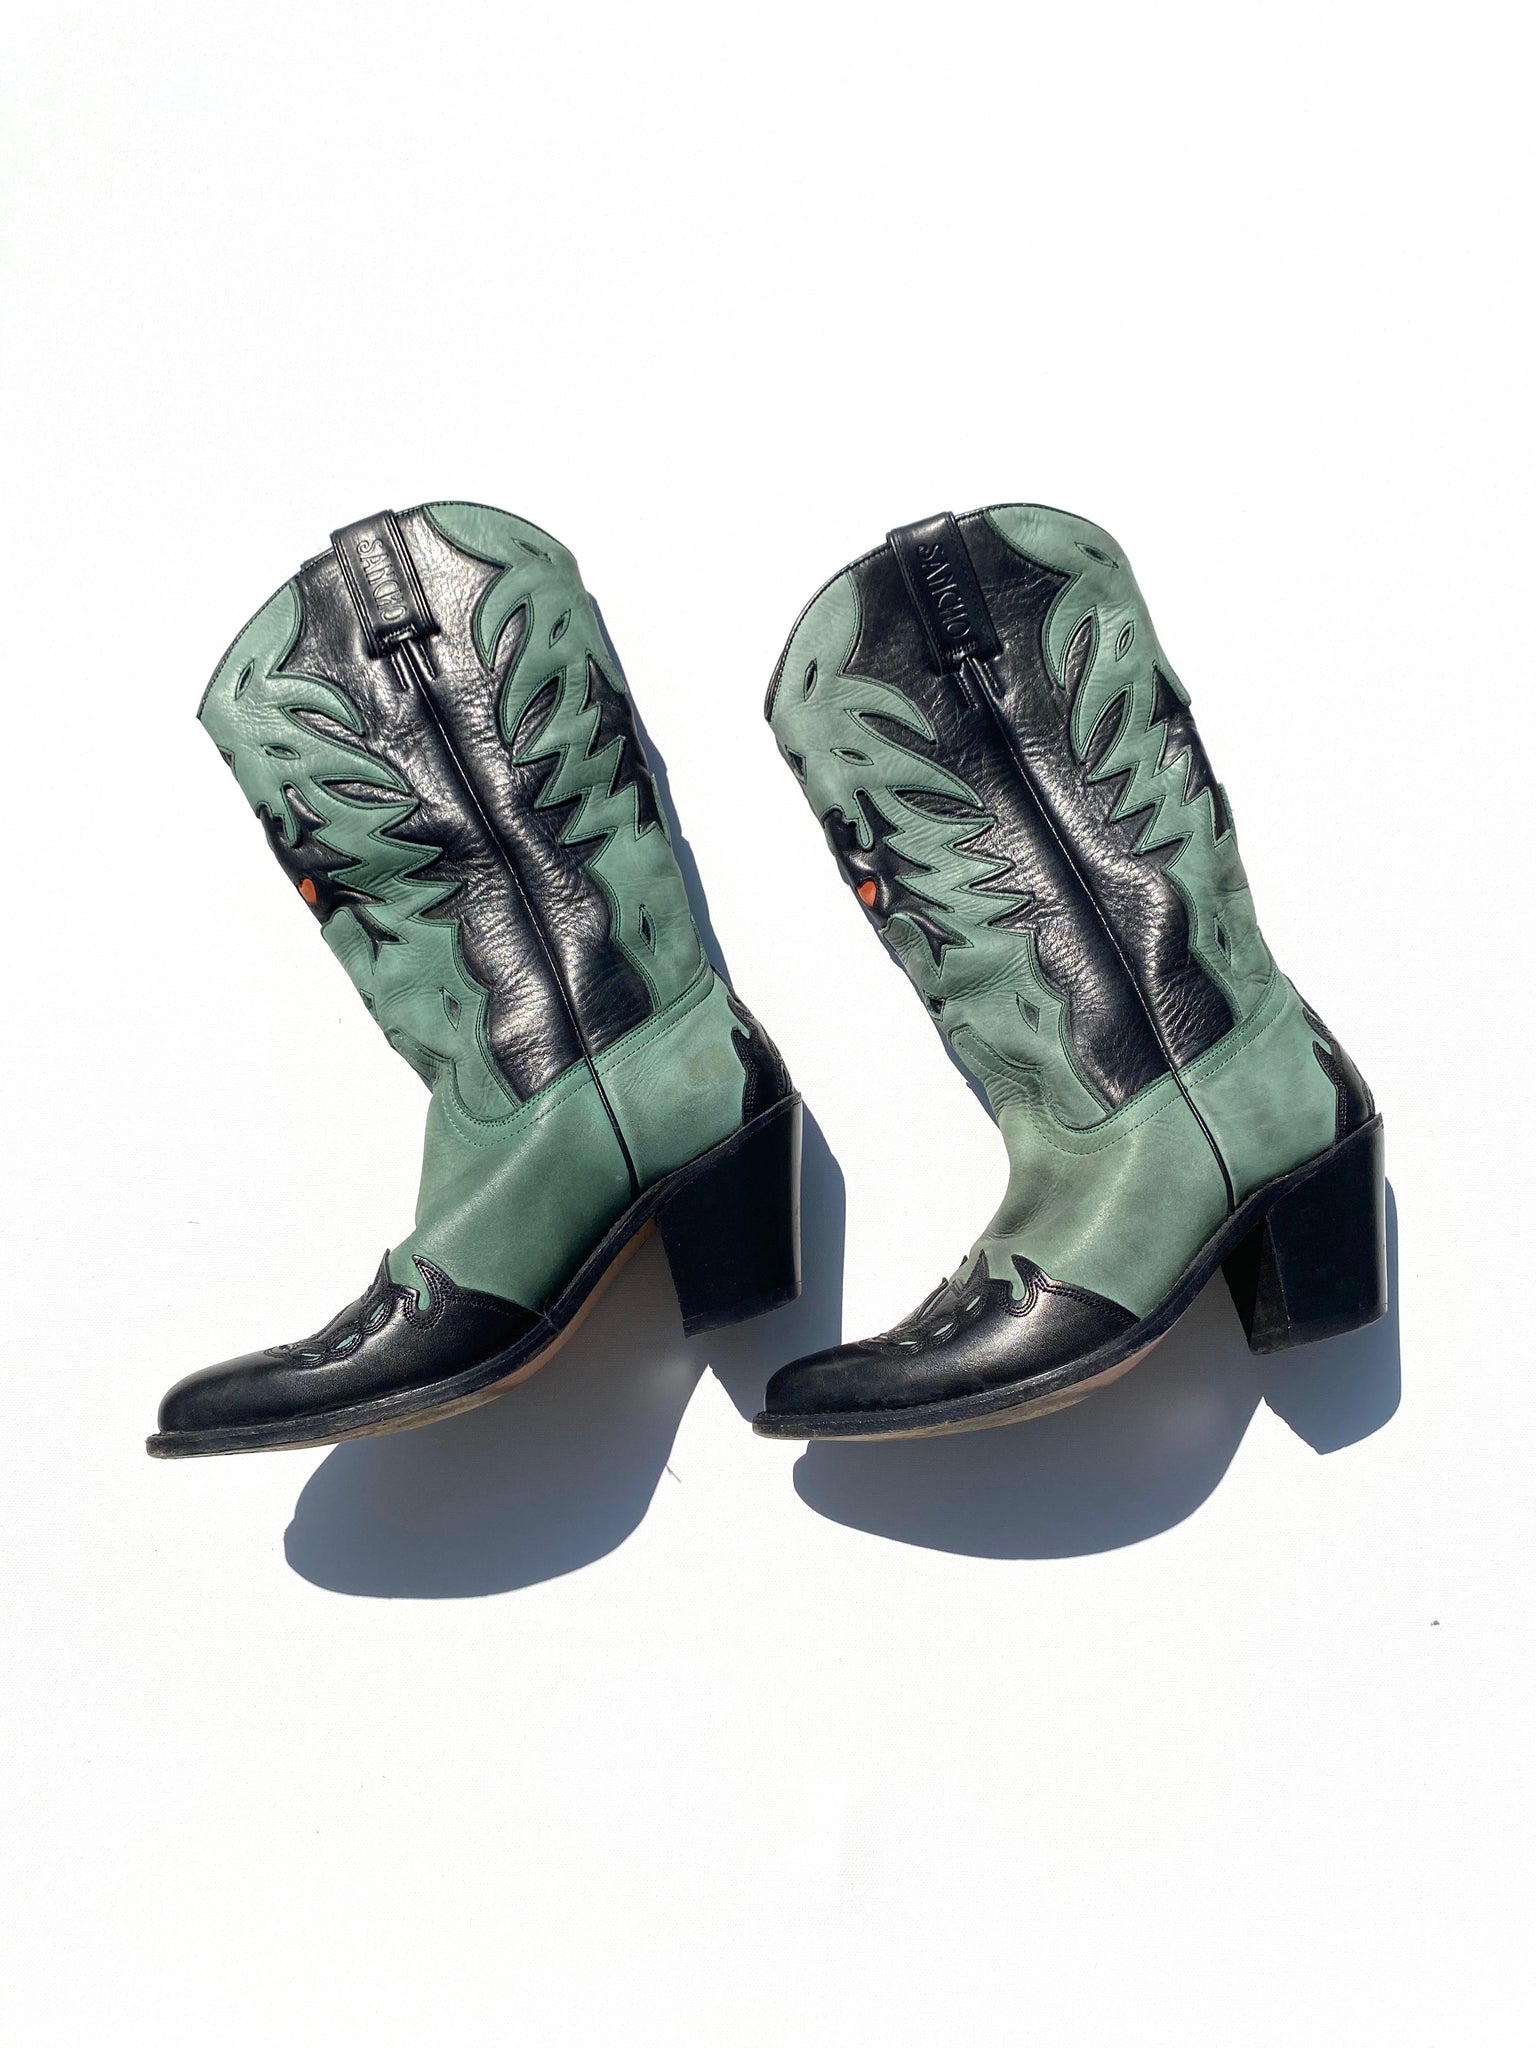 VINTAGE: Western Boots - Green & Black